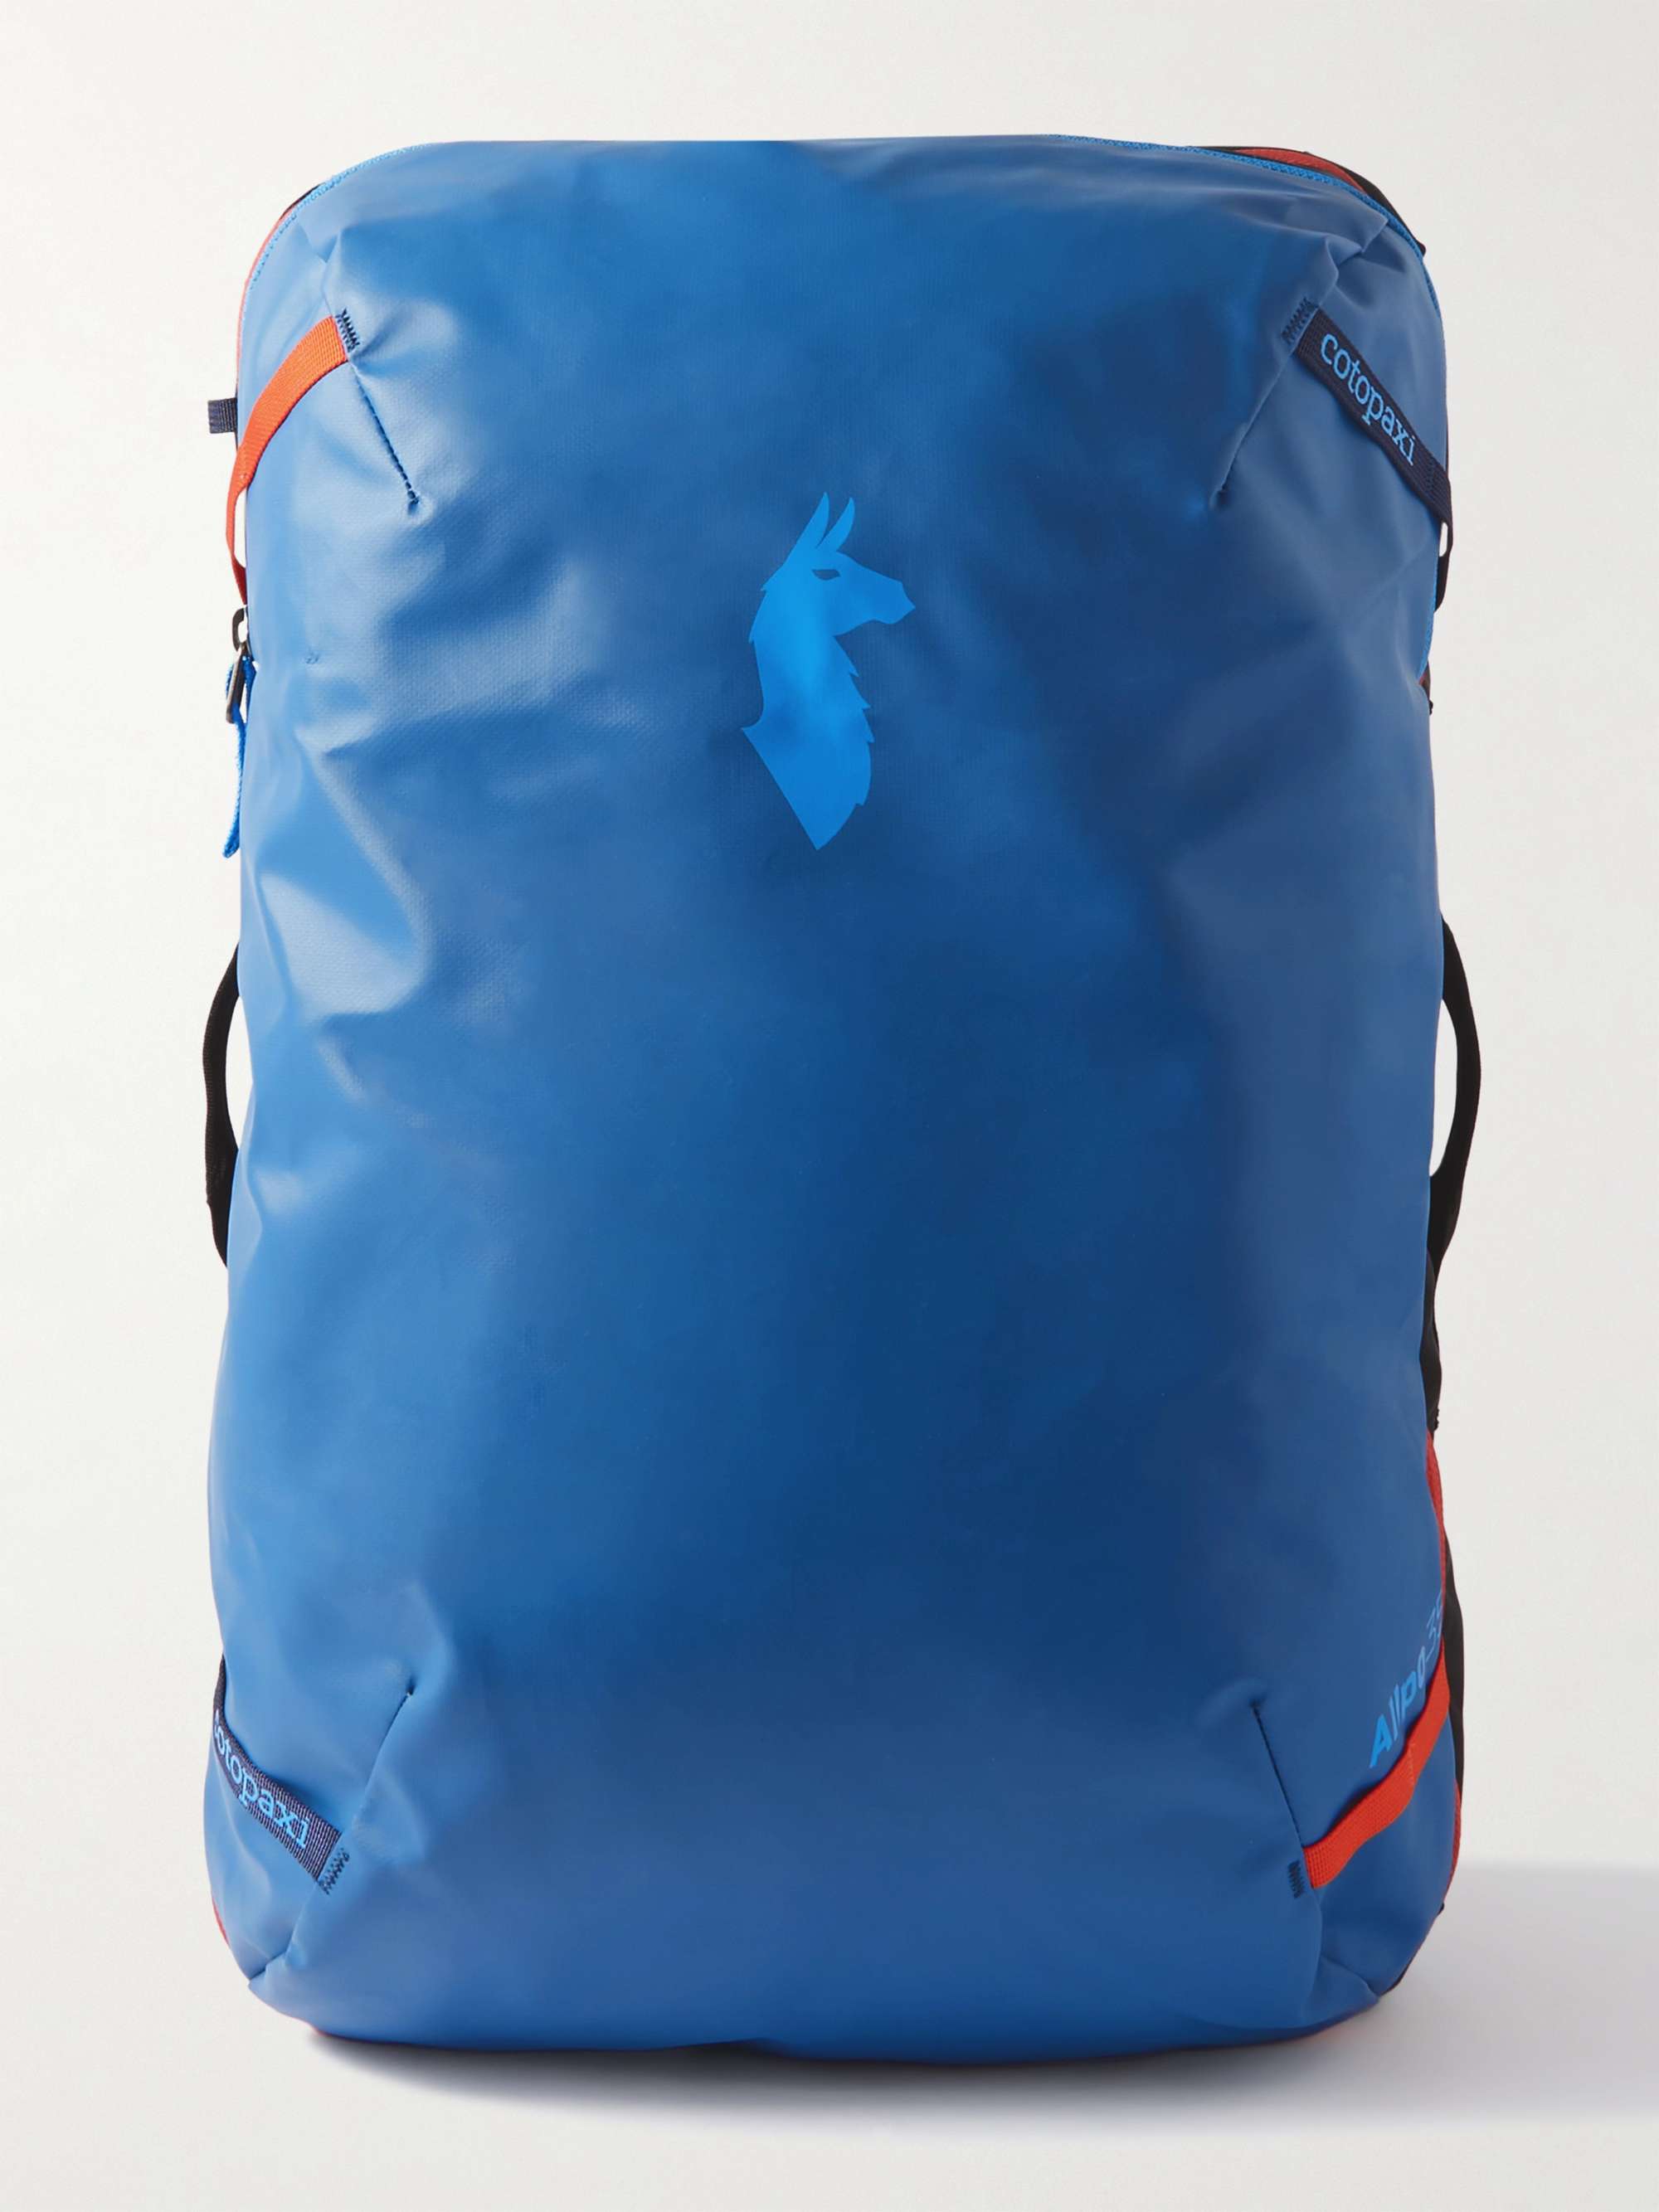 Cotopaxi Backpack Allpa | lupon.gov.ph